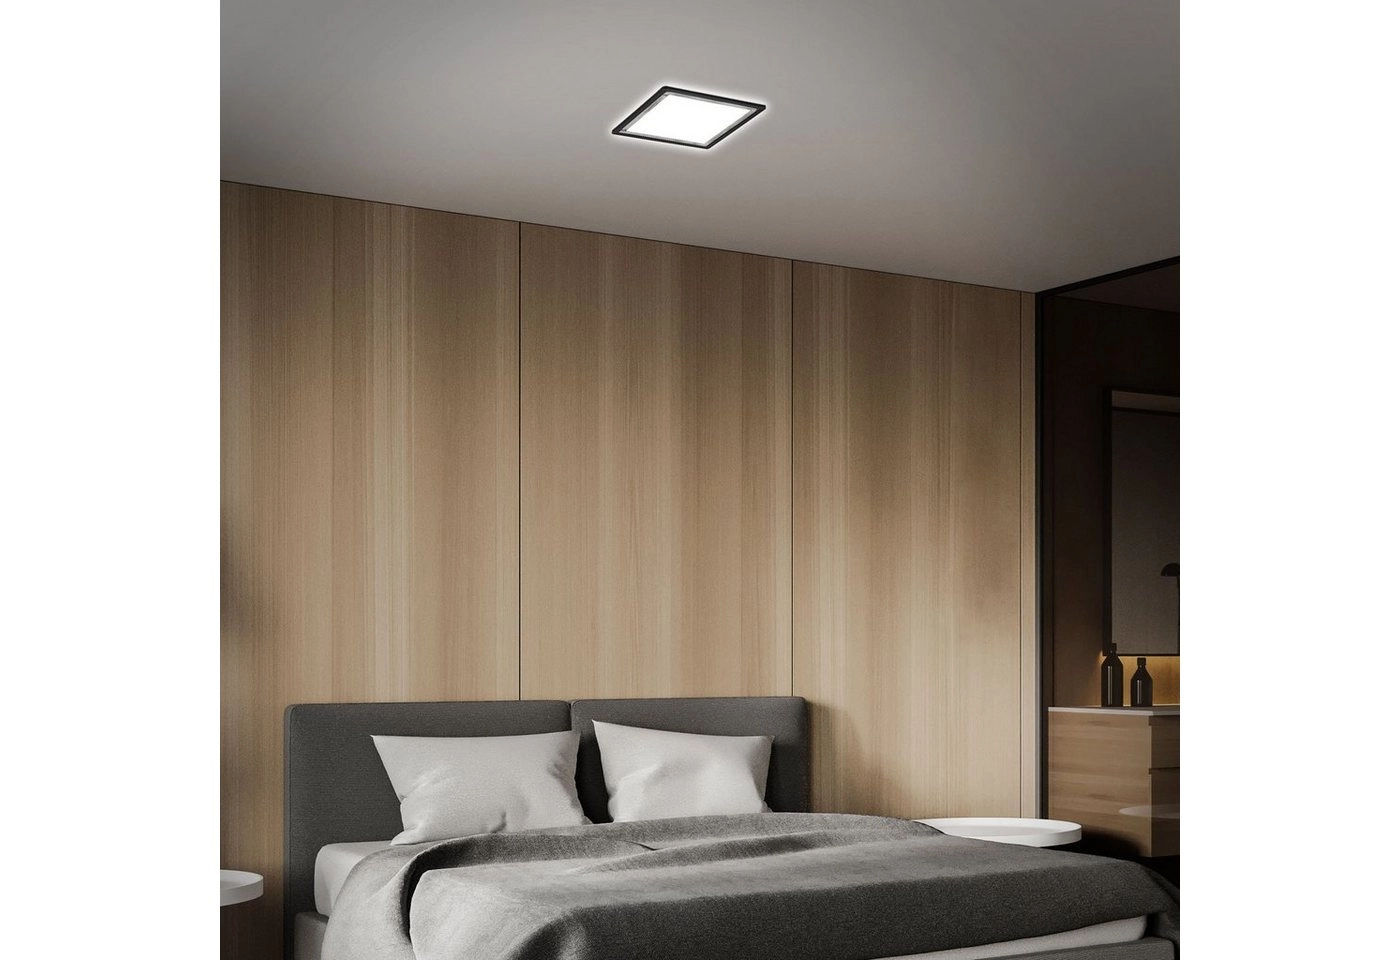 Ultraflaches LED Panel mit LED Backlight, 42 cm, 1x LED, 18 W, 2400 lm, schwarz-silber